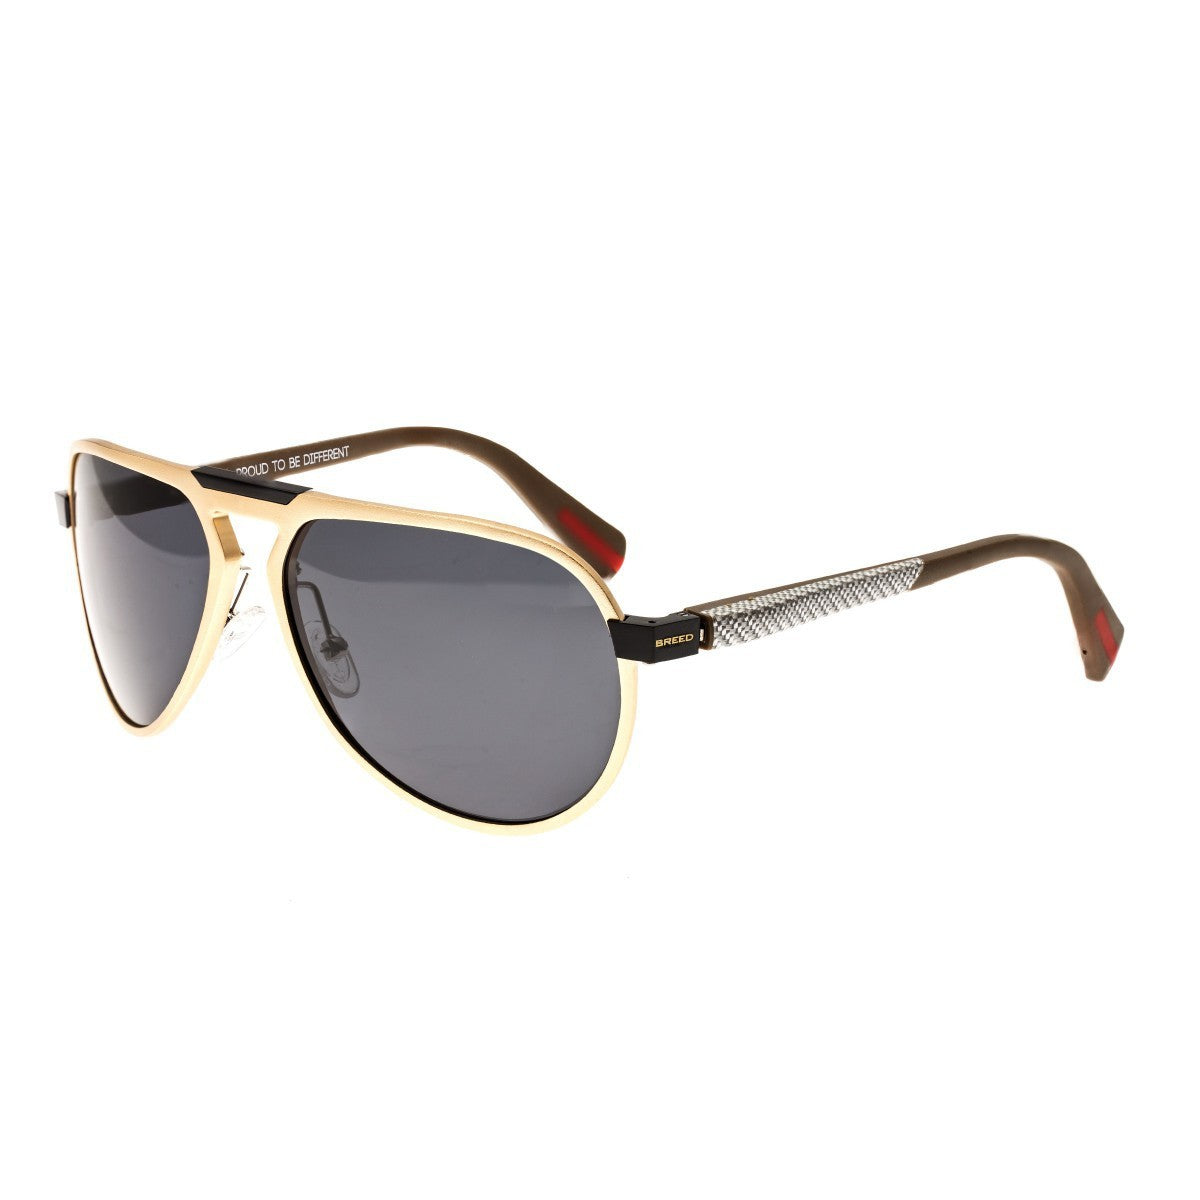 Breed Octans Titanium Polarized Sunglasses - Gold/Black - BSG028GD